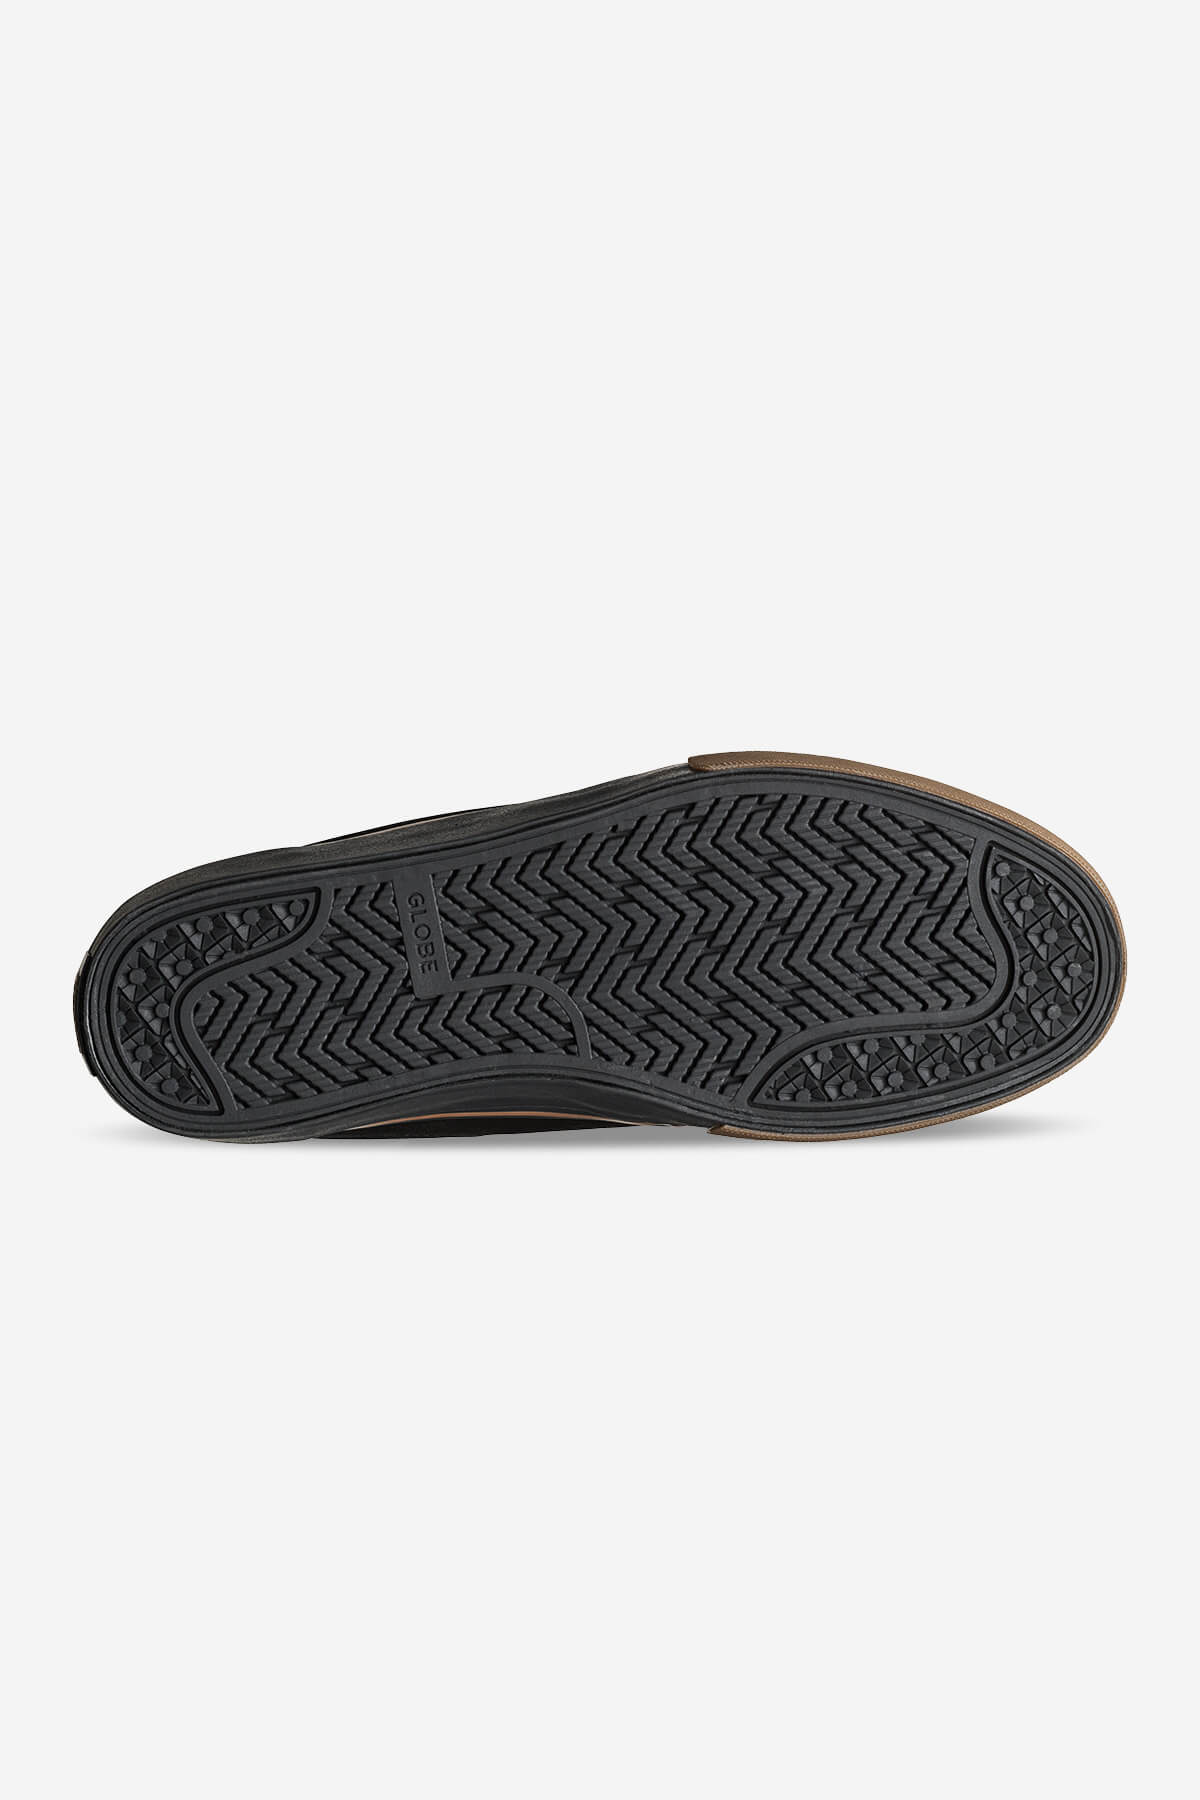 Globe - Mahalo - Schwarz/Gummi - skateboard Schuhe